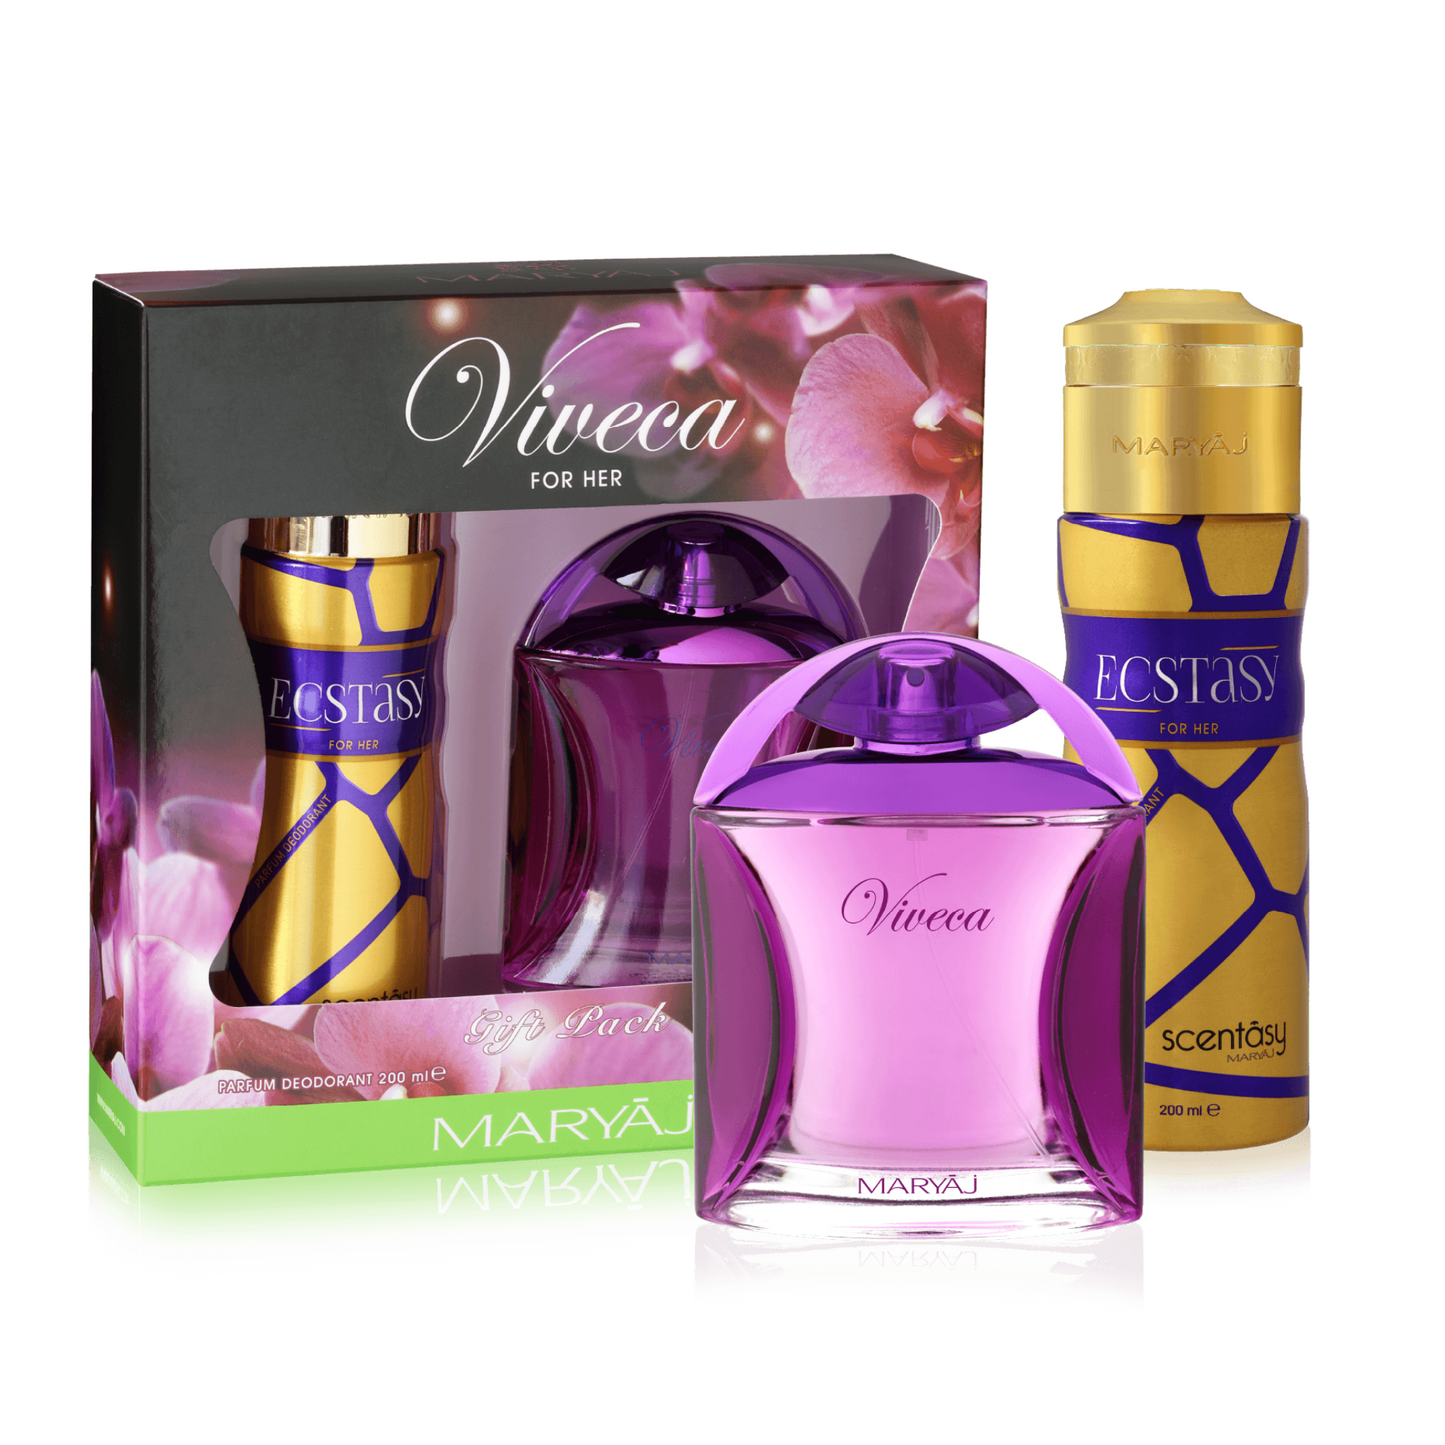 Viveca Perfume Gift Set for Women (Eau de Parfum Spray 100ml + Ecstasy Perfume Body Spray 200ml)